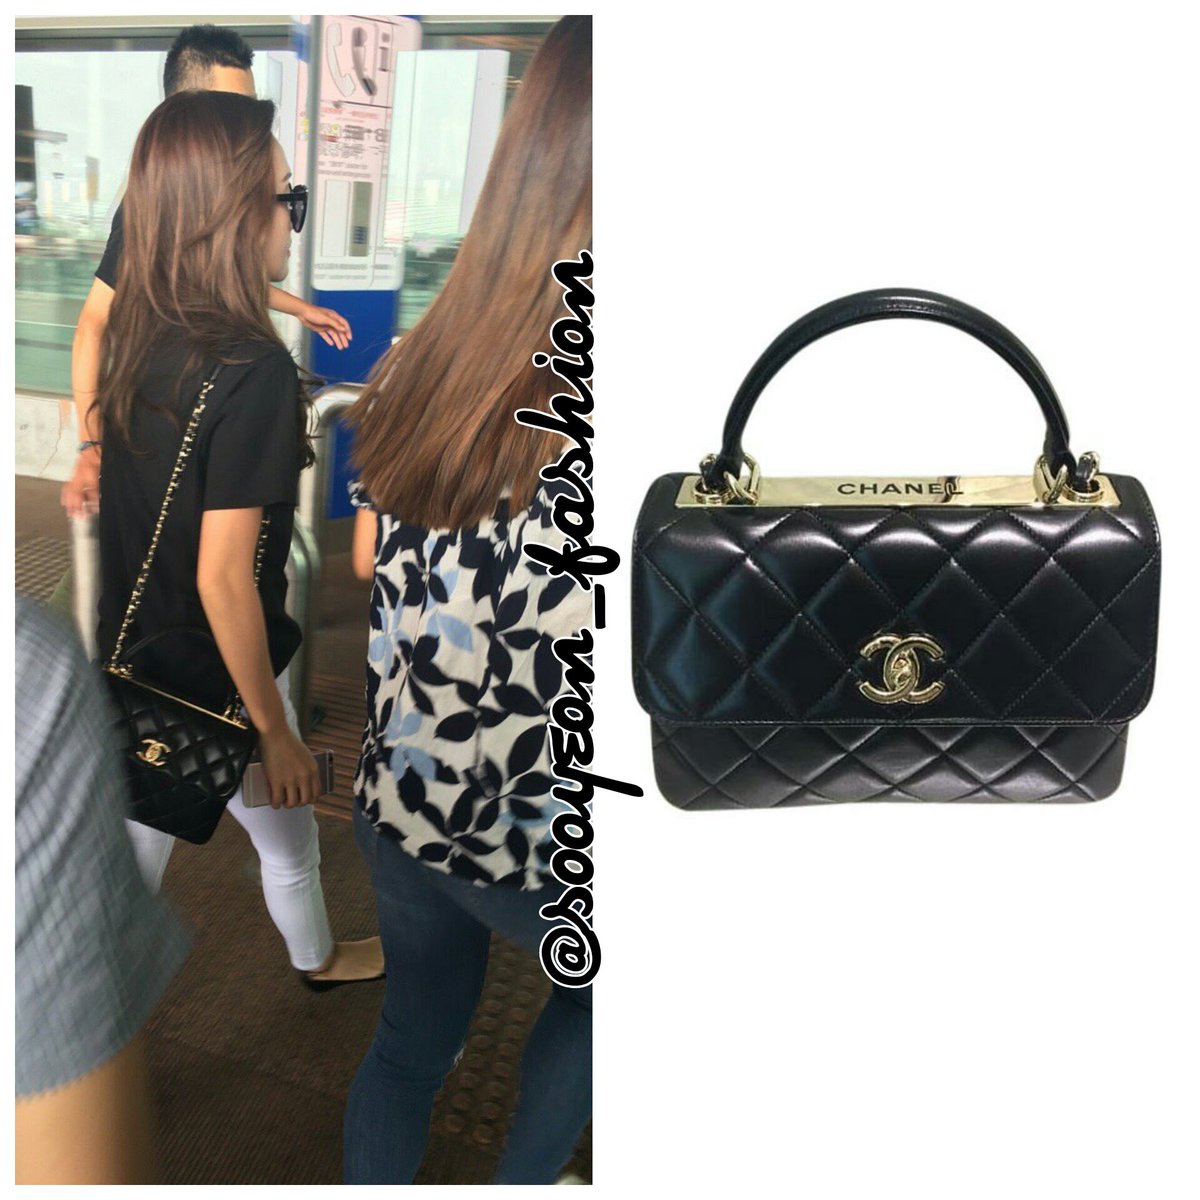 jsy fashion on X: 160810 Beijing Airpot CHANEL: Small Trendy CC Flap Bag ( Black), $5600  #JessicaJung   / X